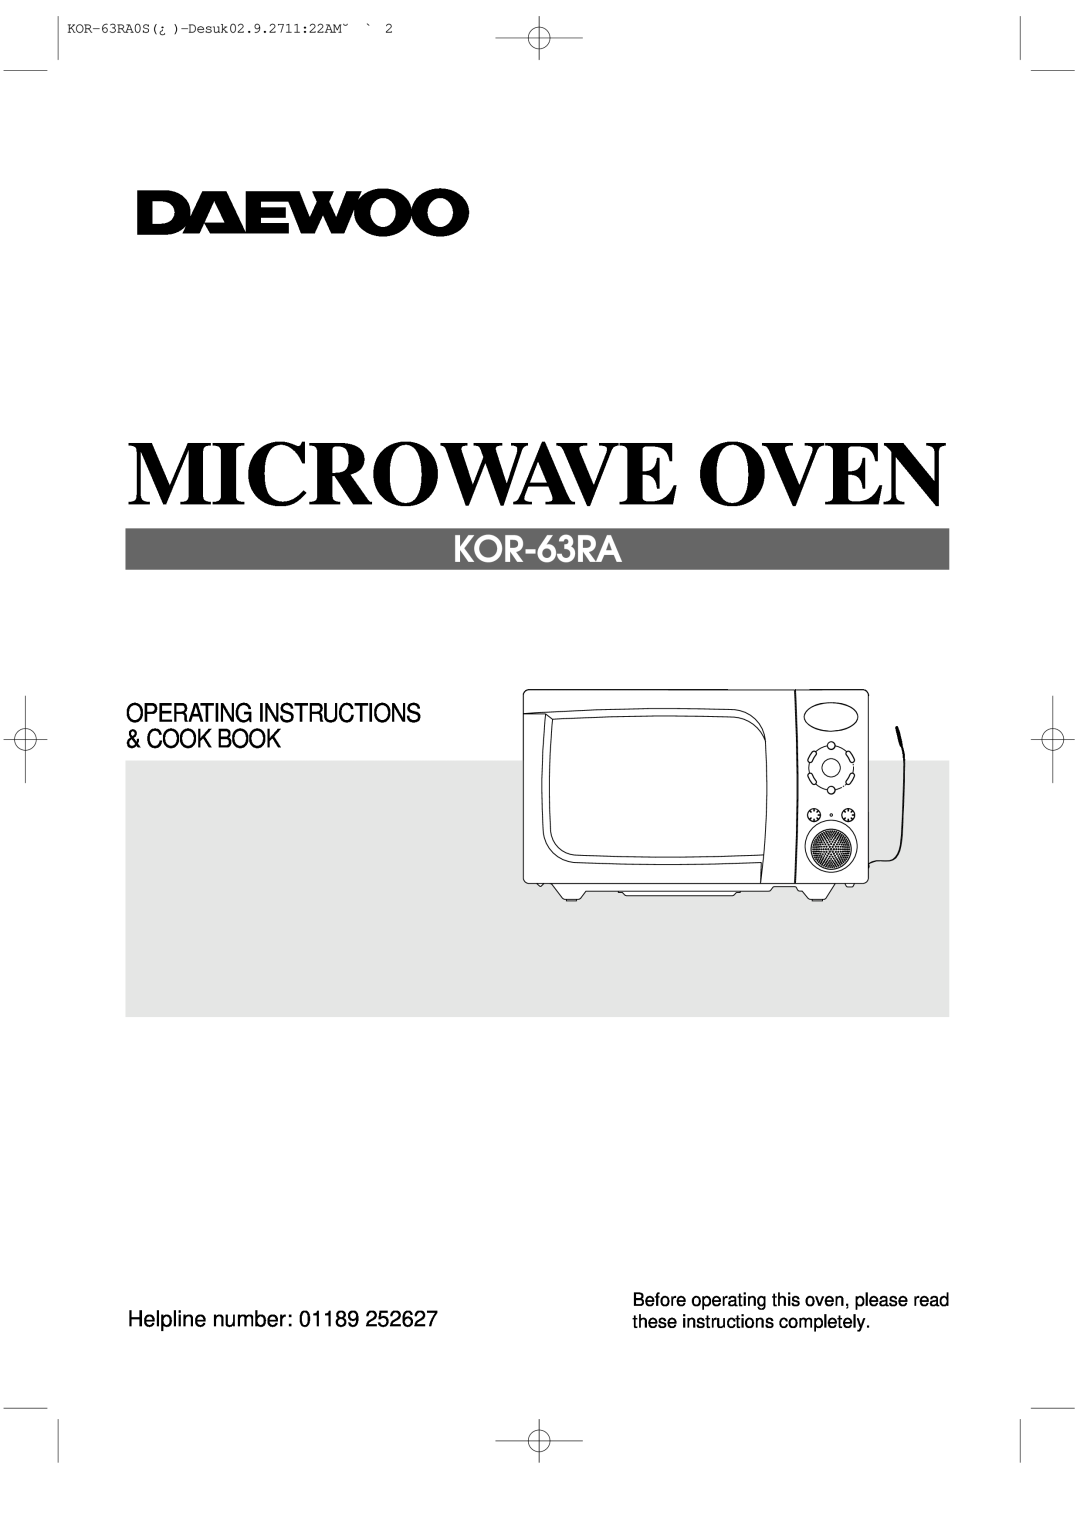 Daewoo KOR-63RA manual Helpline number, Microwave Oven, Operating Instructions & Cook Book 